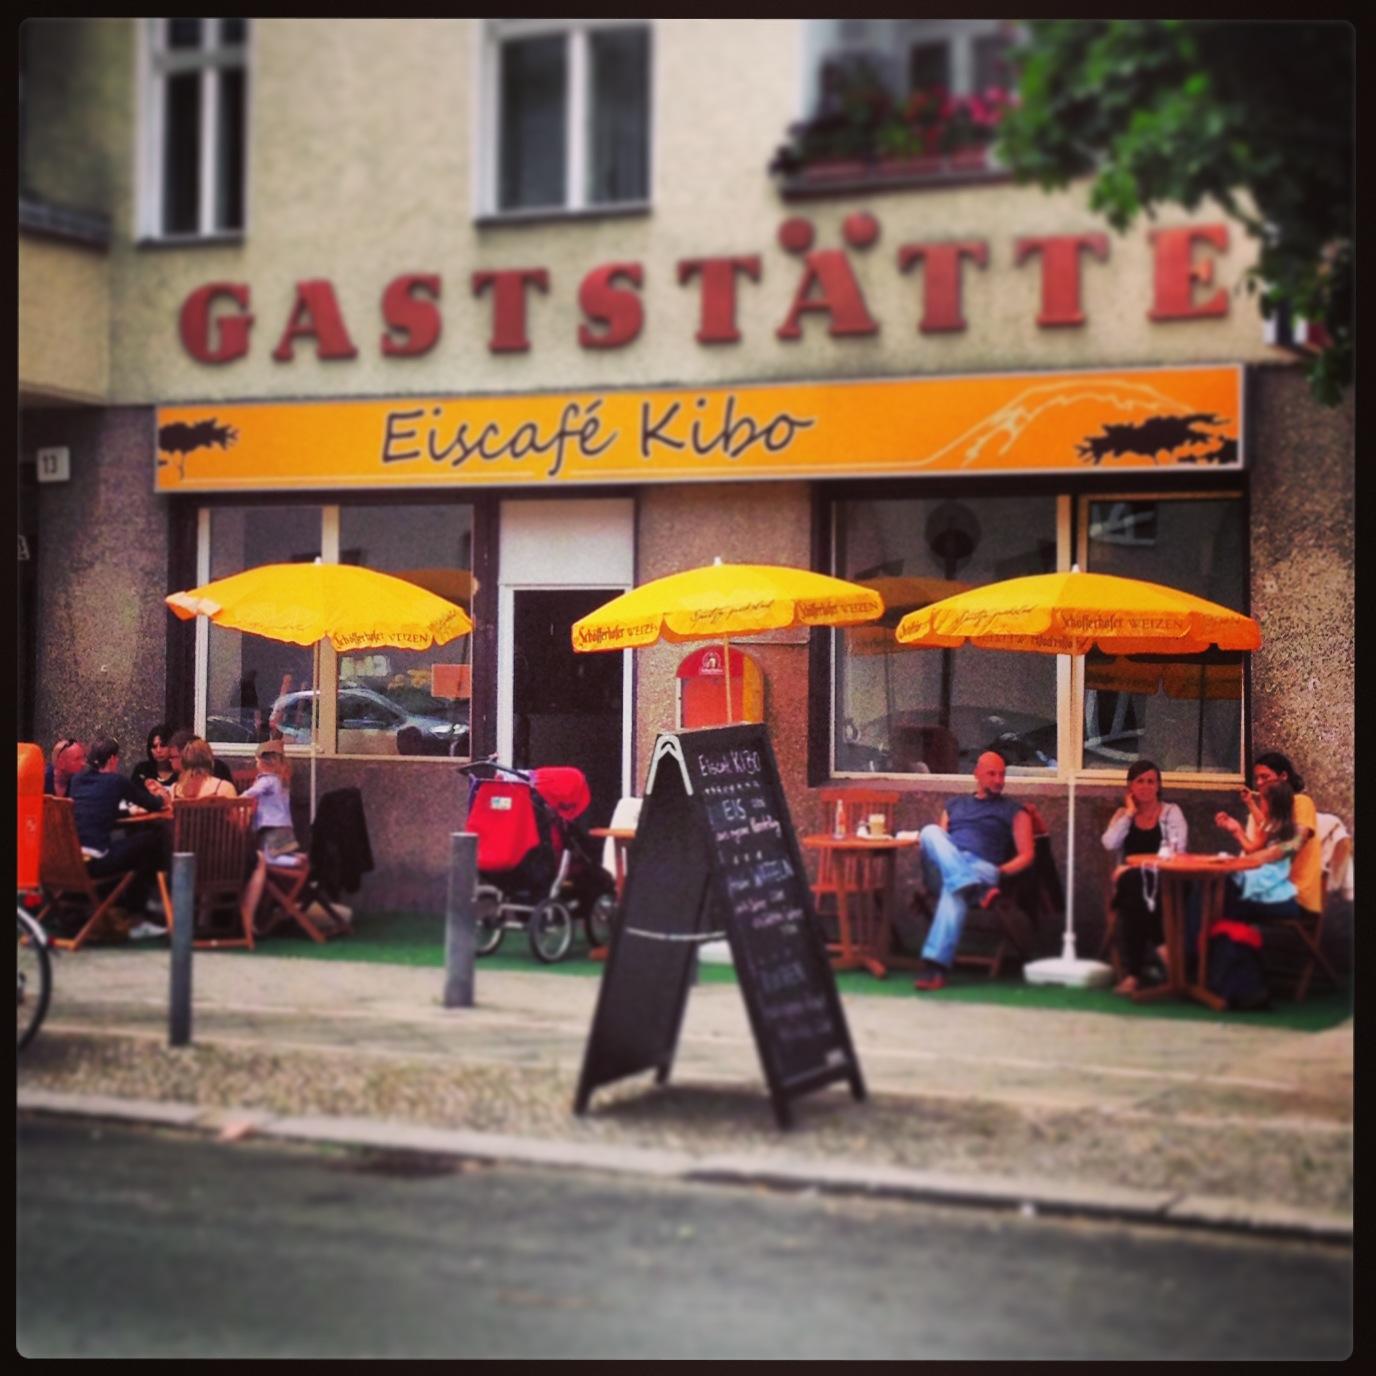 Restaurant "Eiscafé Kibo" in Berlin